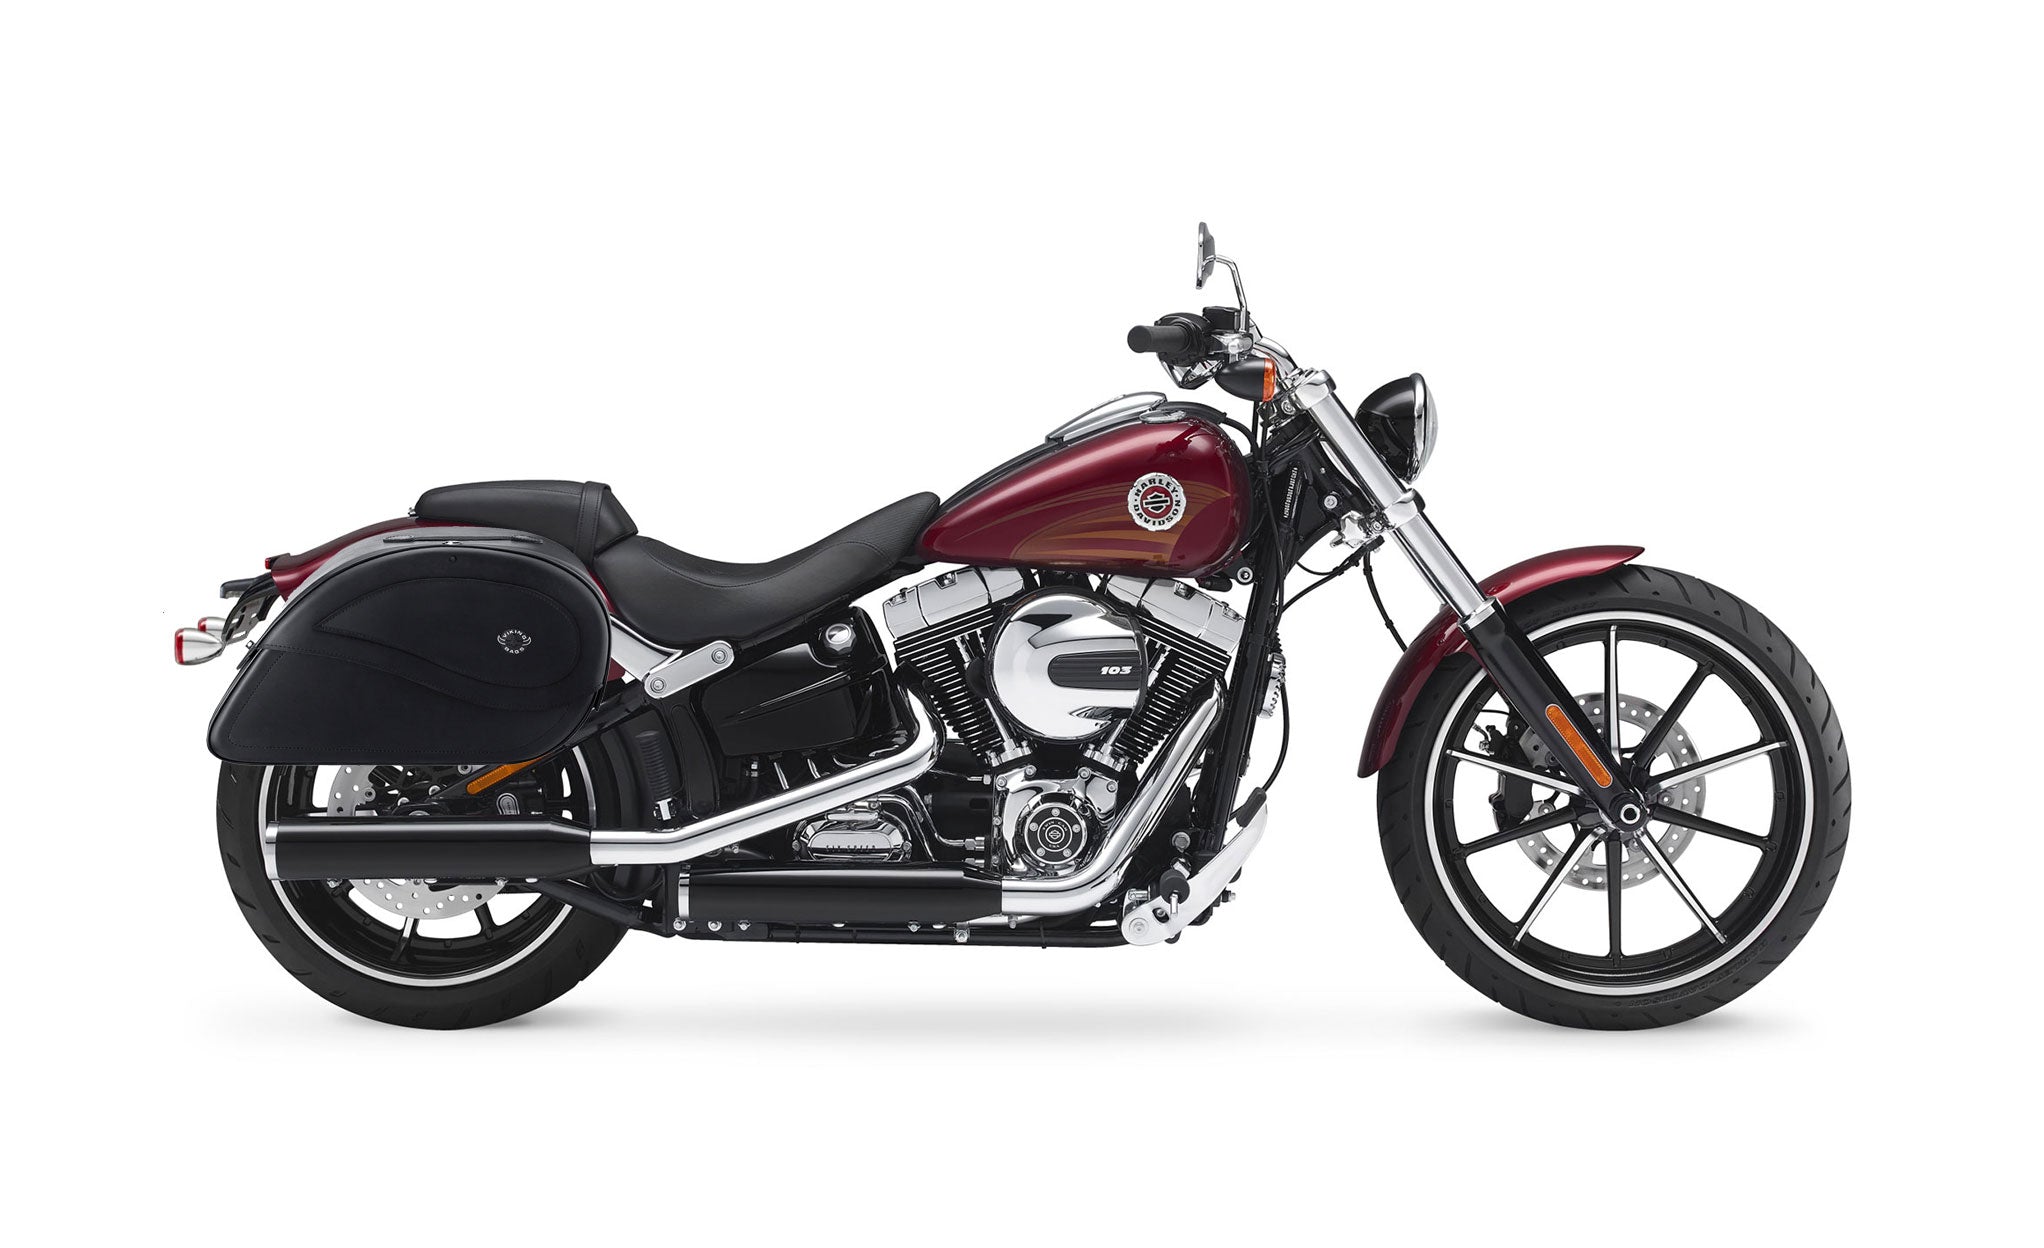 Viking Ultimate Large Leather Motorcycle Saddlebags For Harley Davidson Softail Breakout Fxsb on Bike Photo @expand